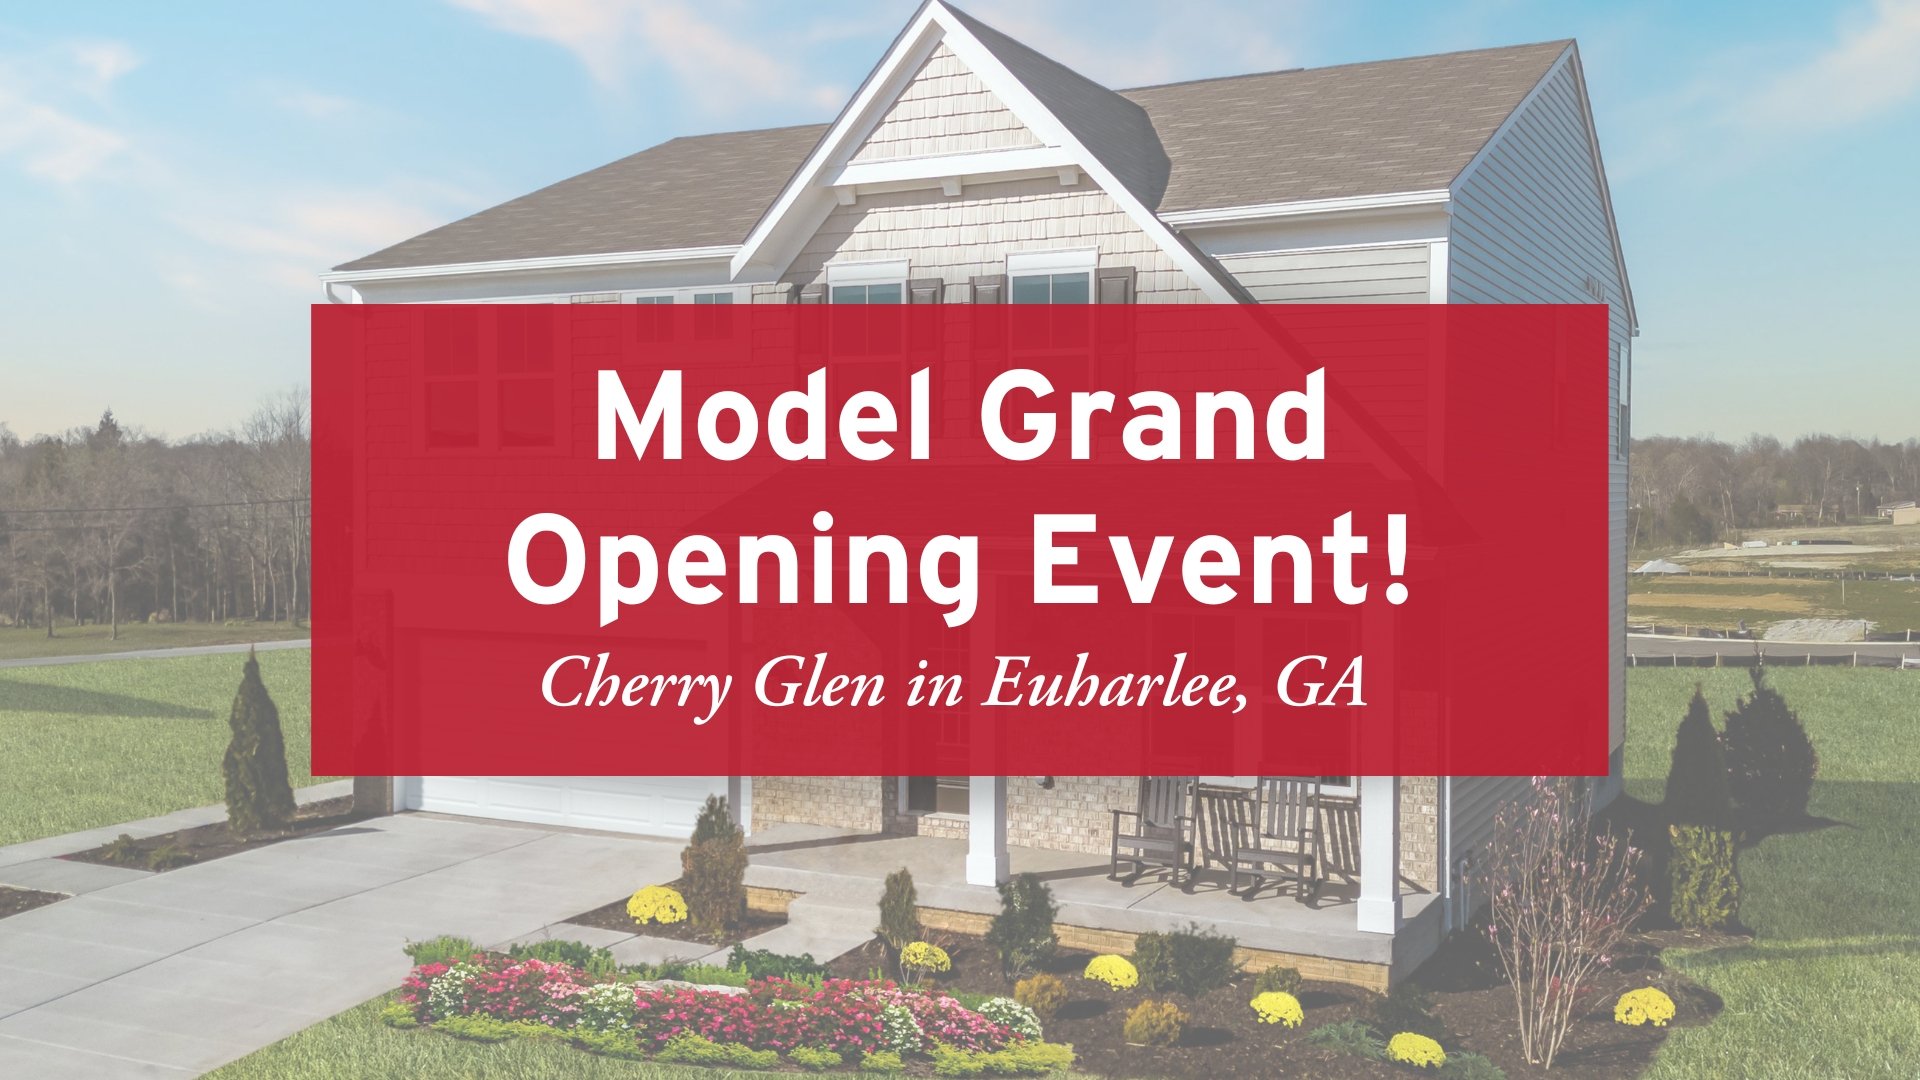 Model Grand Opening Event in Euharlee, GA!